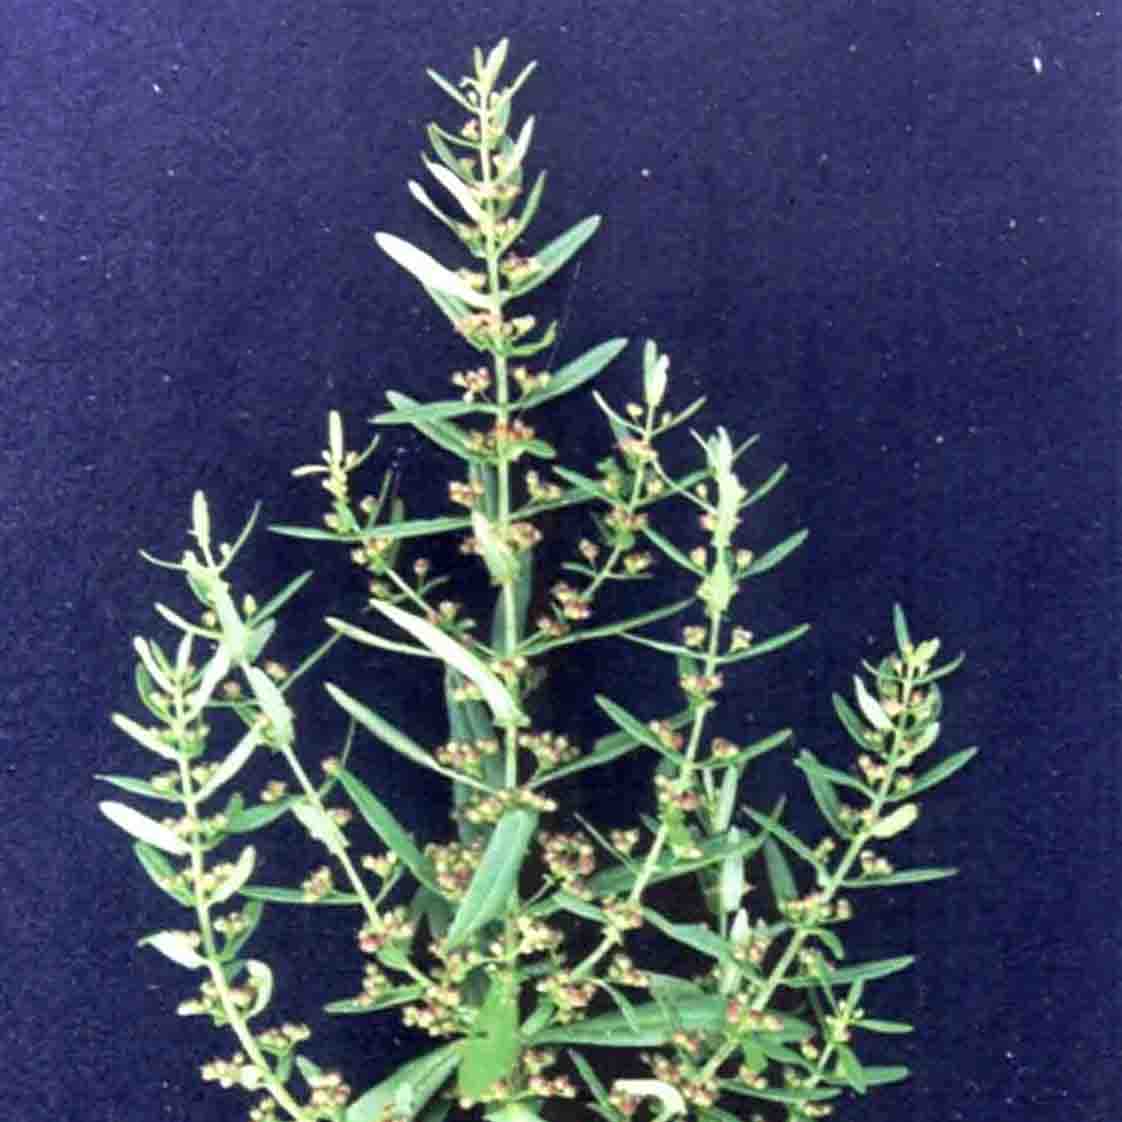 Rotala densiflora